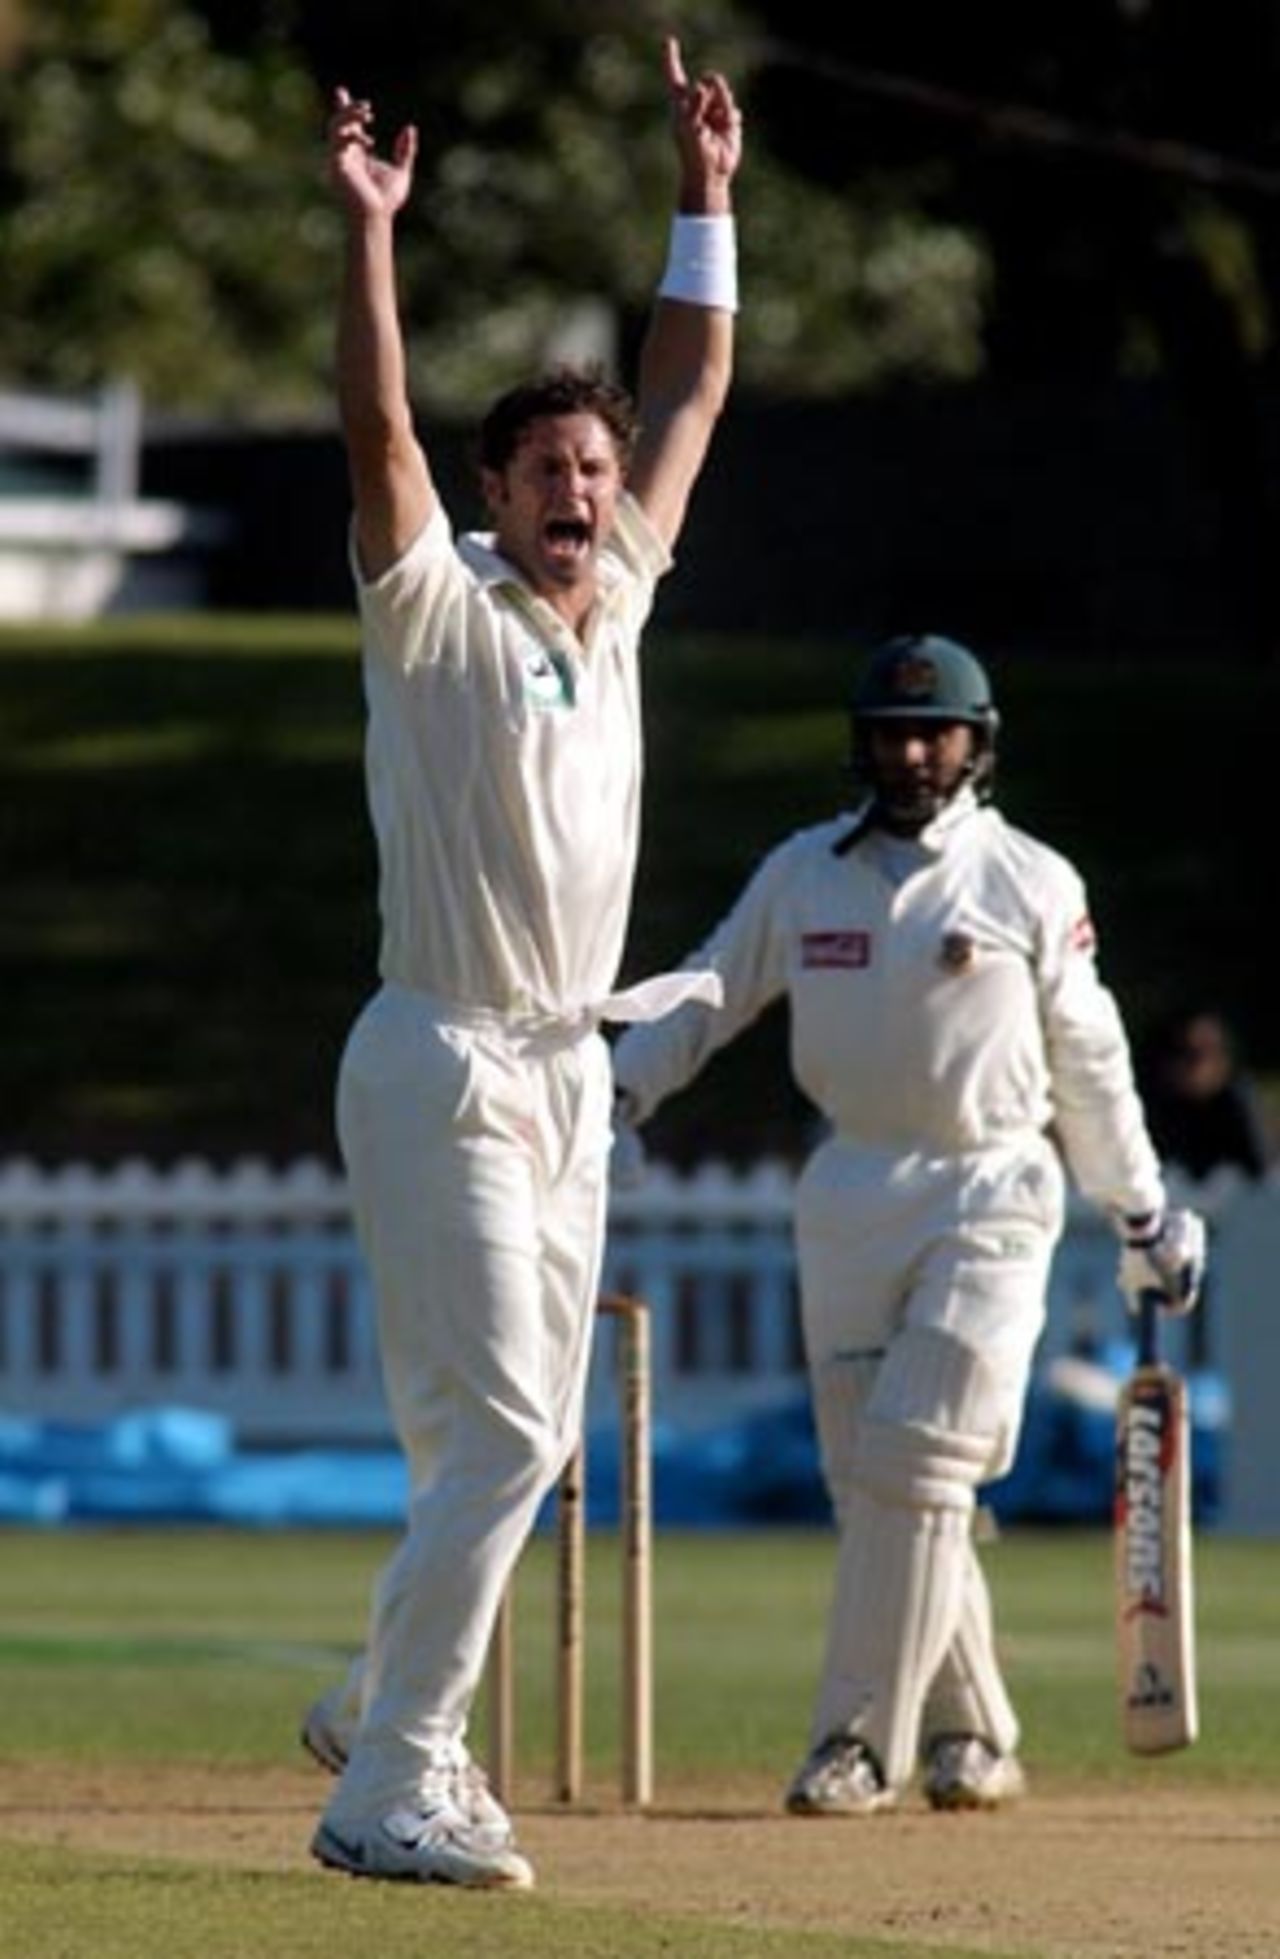 New Zealand bowler Chris Cairns unsuccessfully appeals for the dismissal of Bangladesh batsman Javed Omar (right). 2nd Test: New Zealand v Bangladesh at Basin Reserve, Wellington, 26-30 Dec 2001 (29 December 2001).